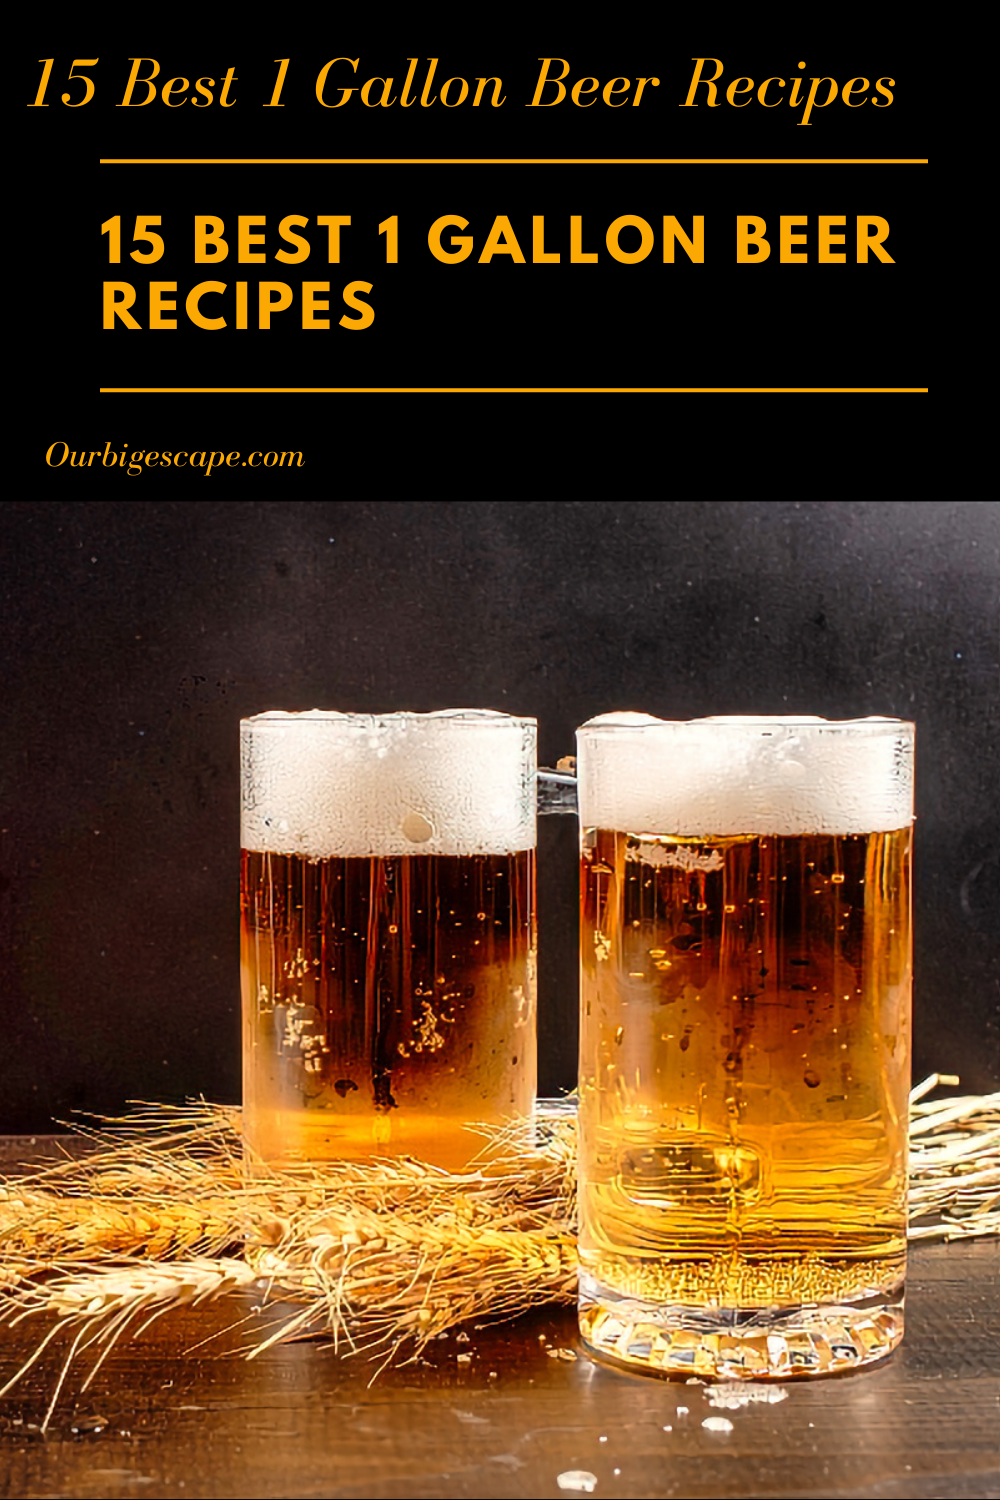 15 Best 1 Gallon Beer Recipes